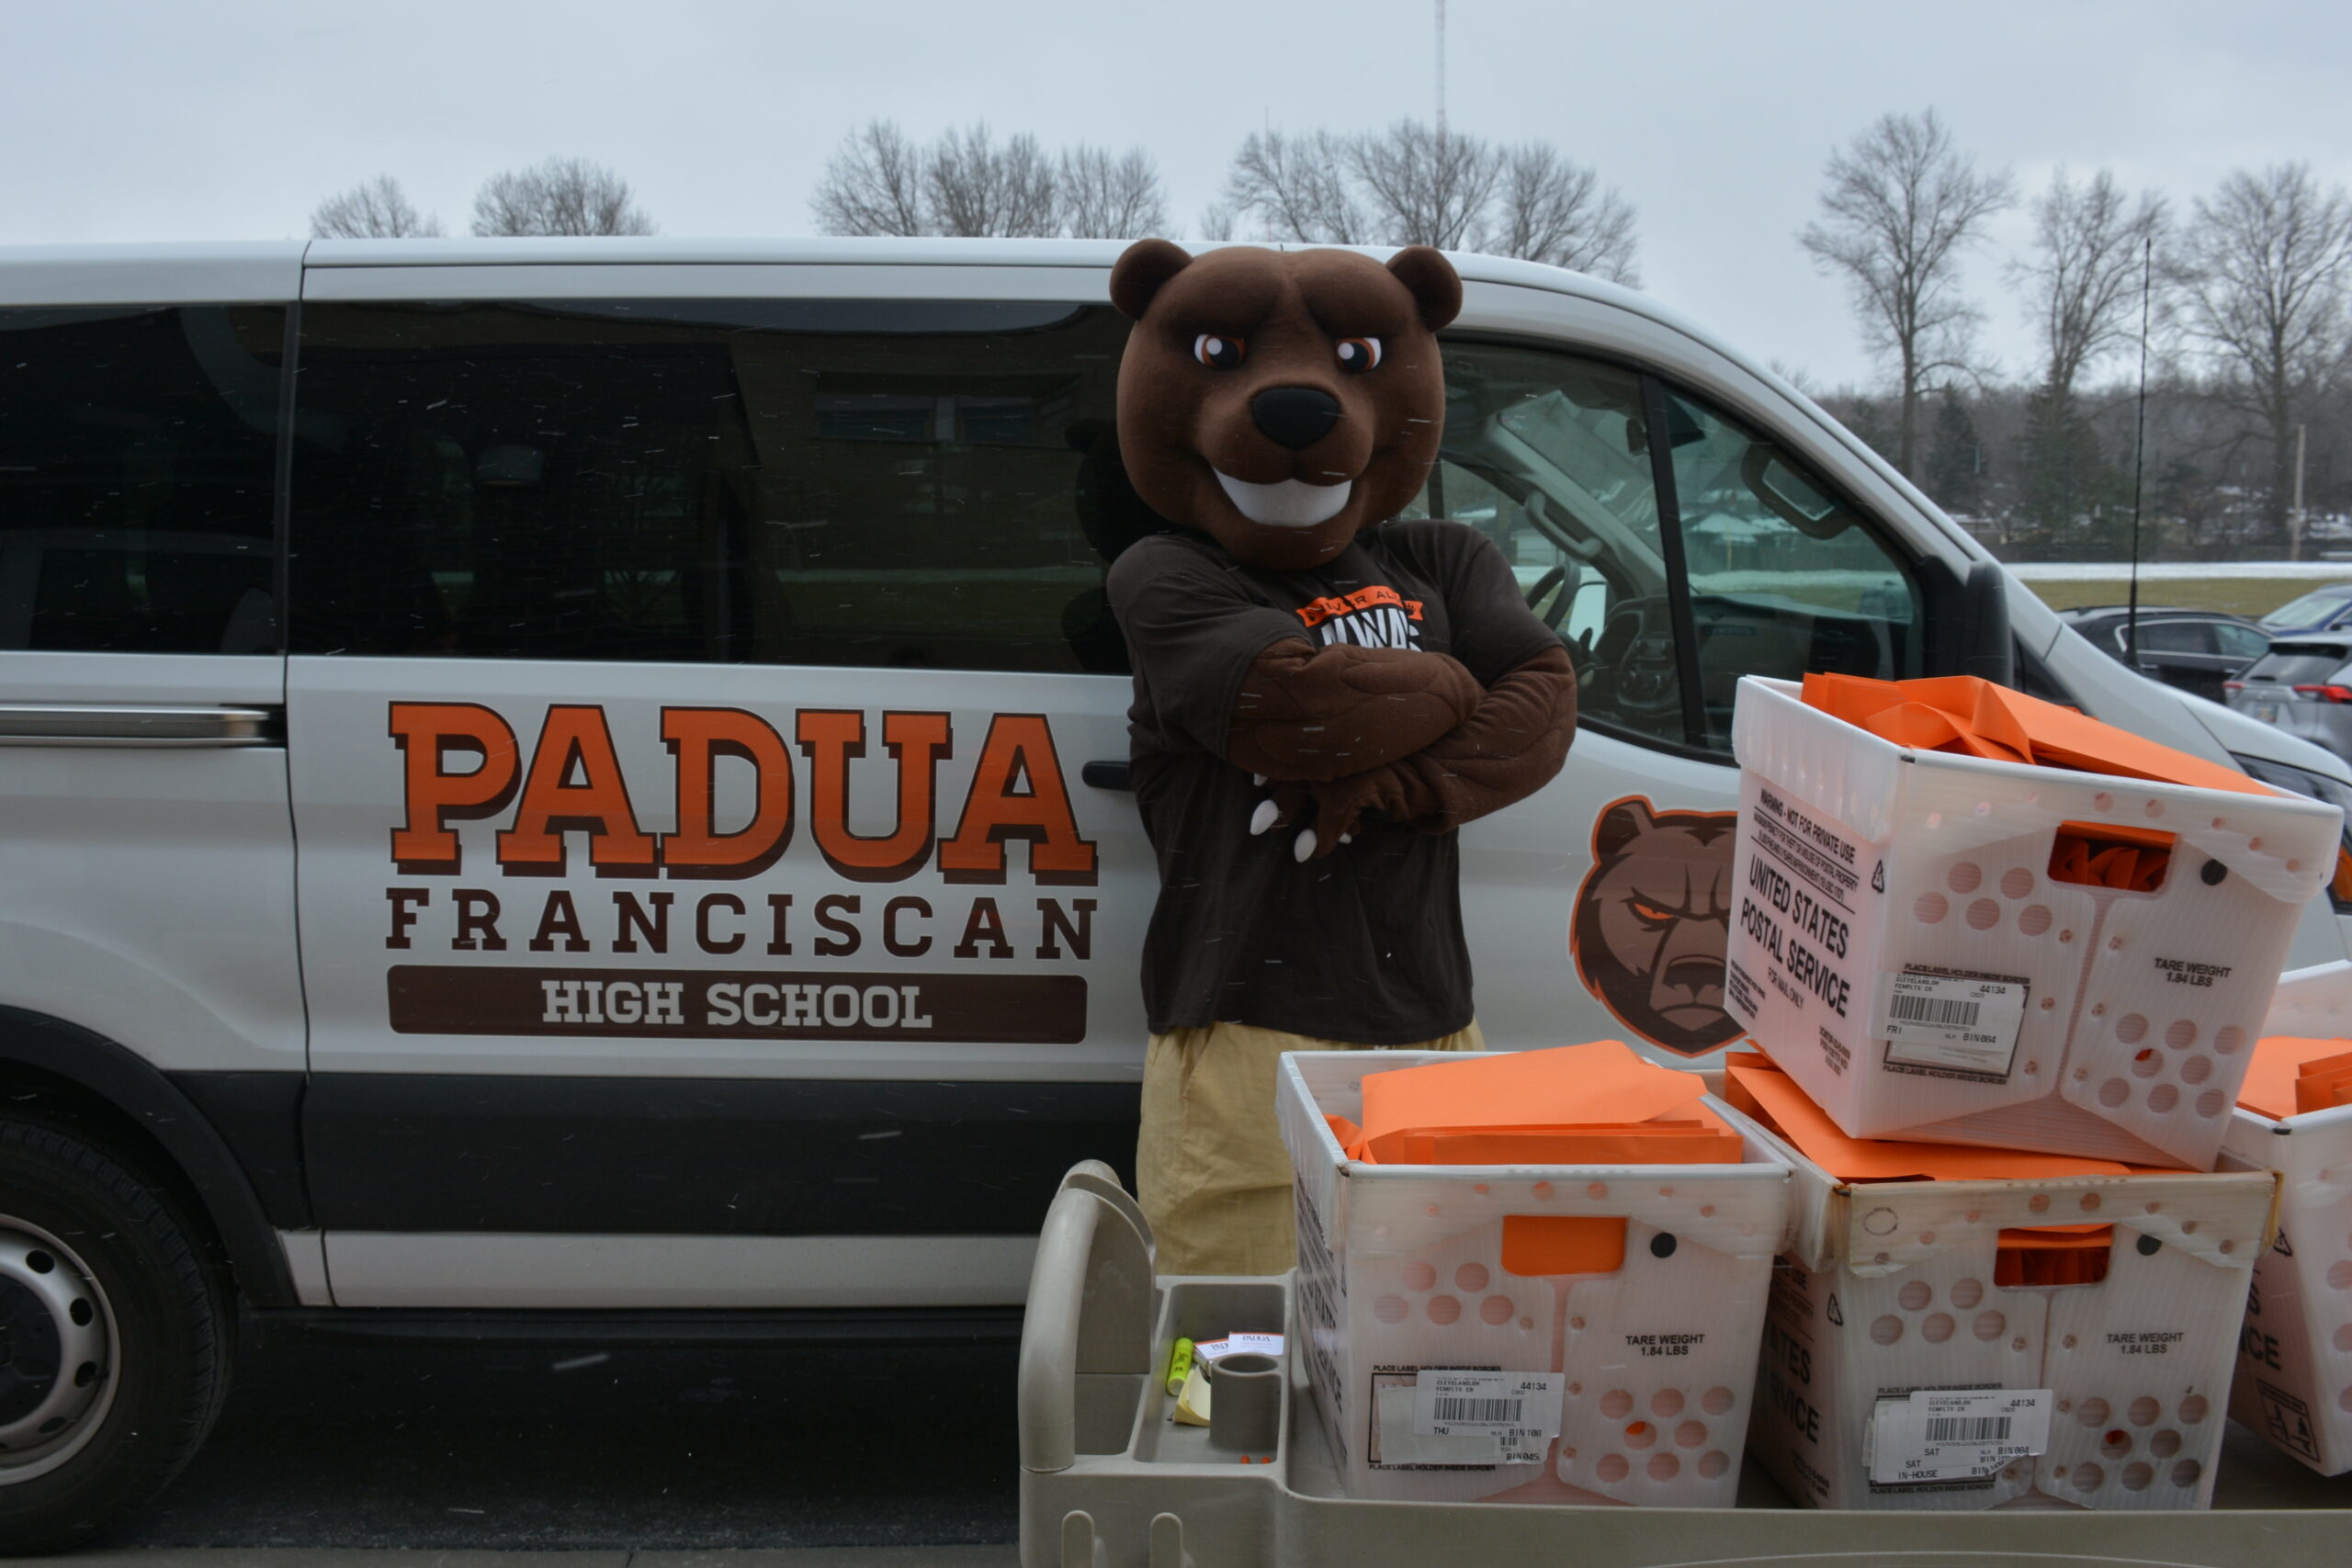 Padua Franciscan High School Mascot in front of crates of school supplies